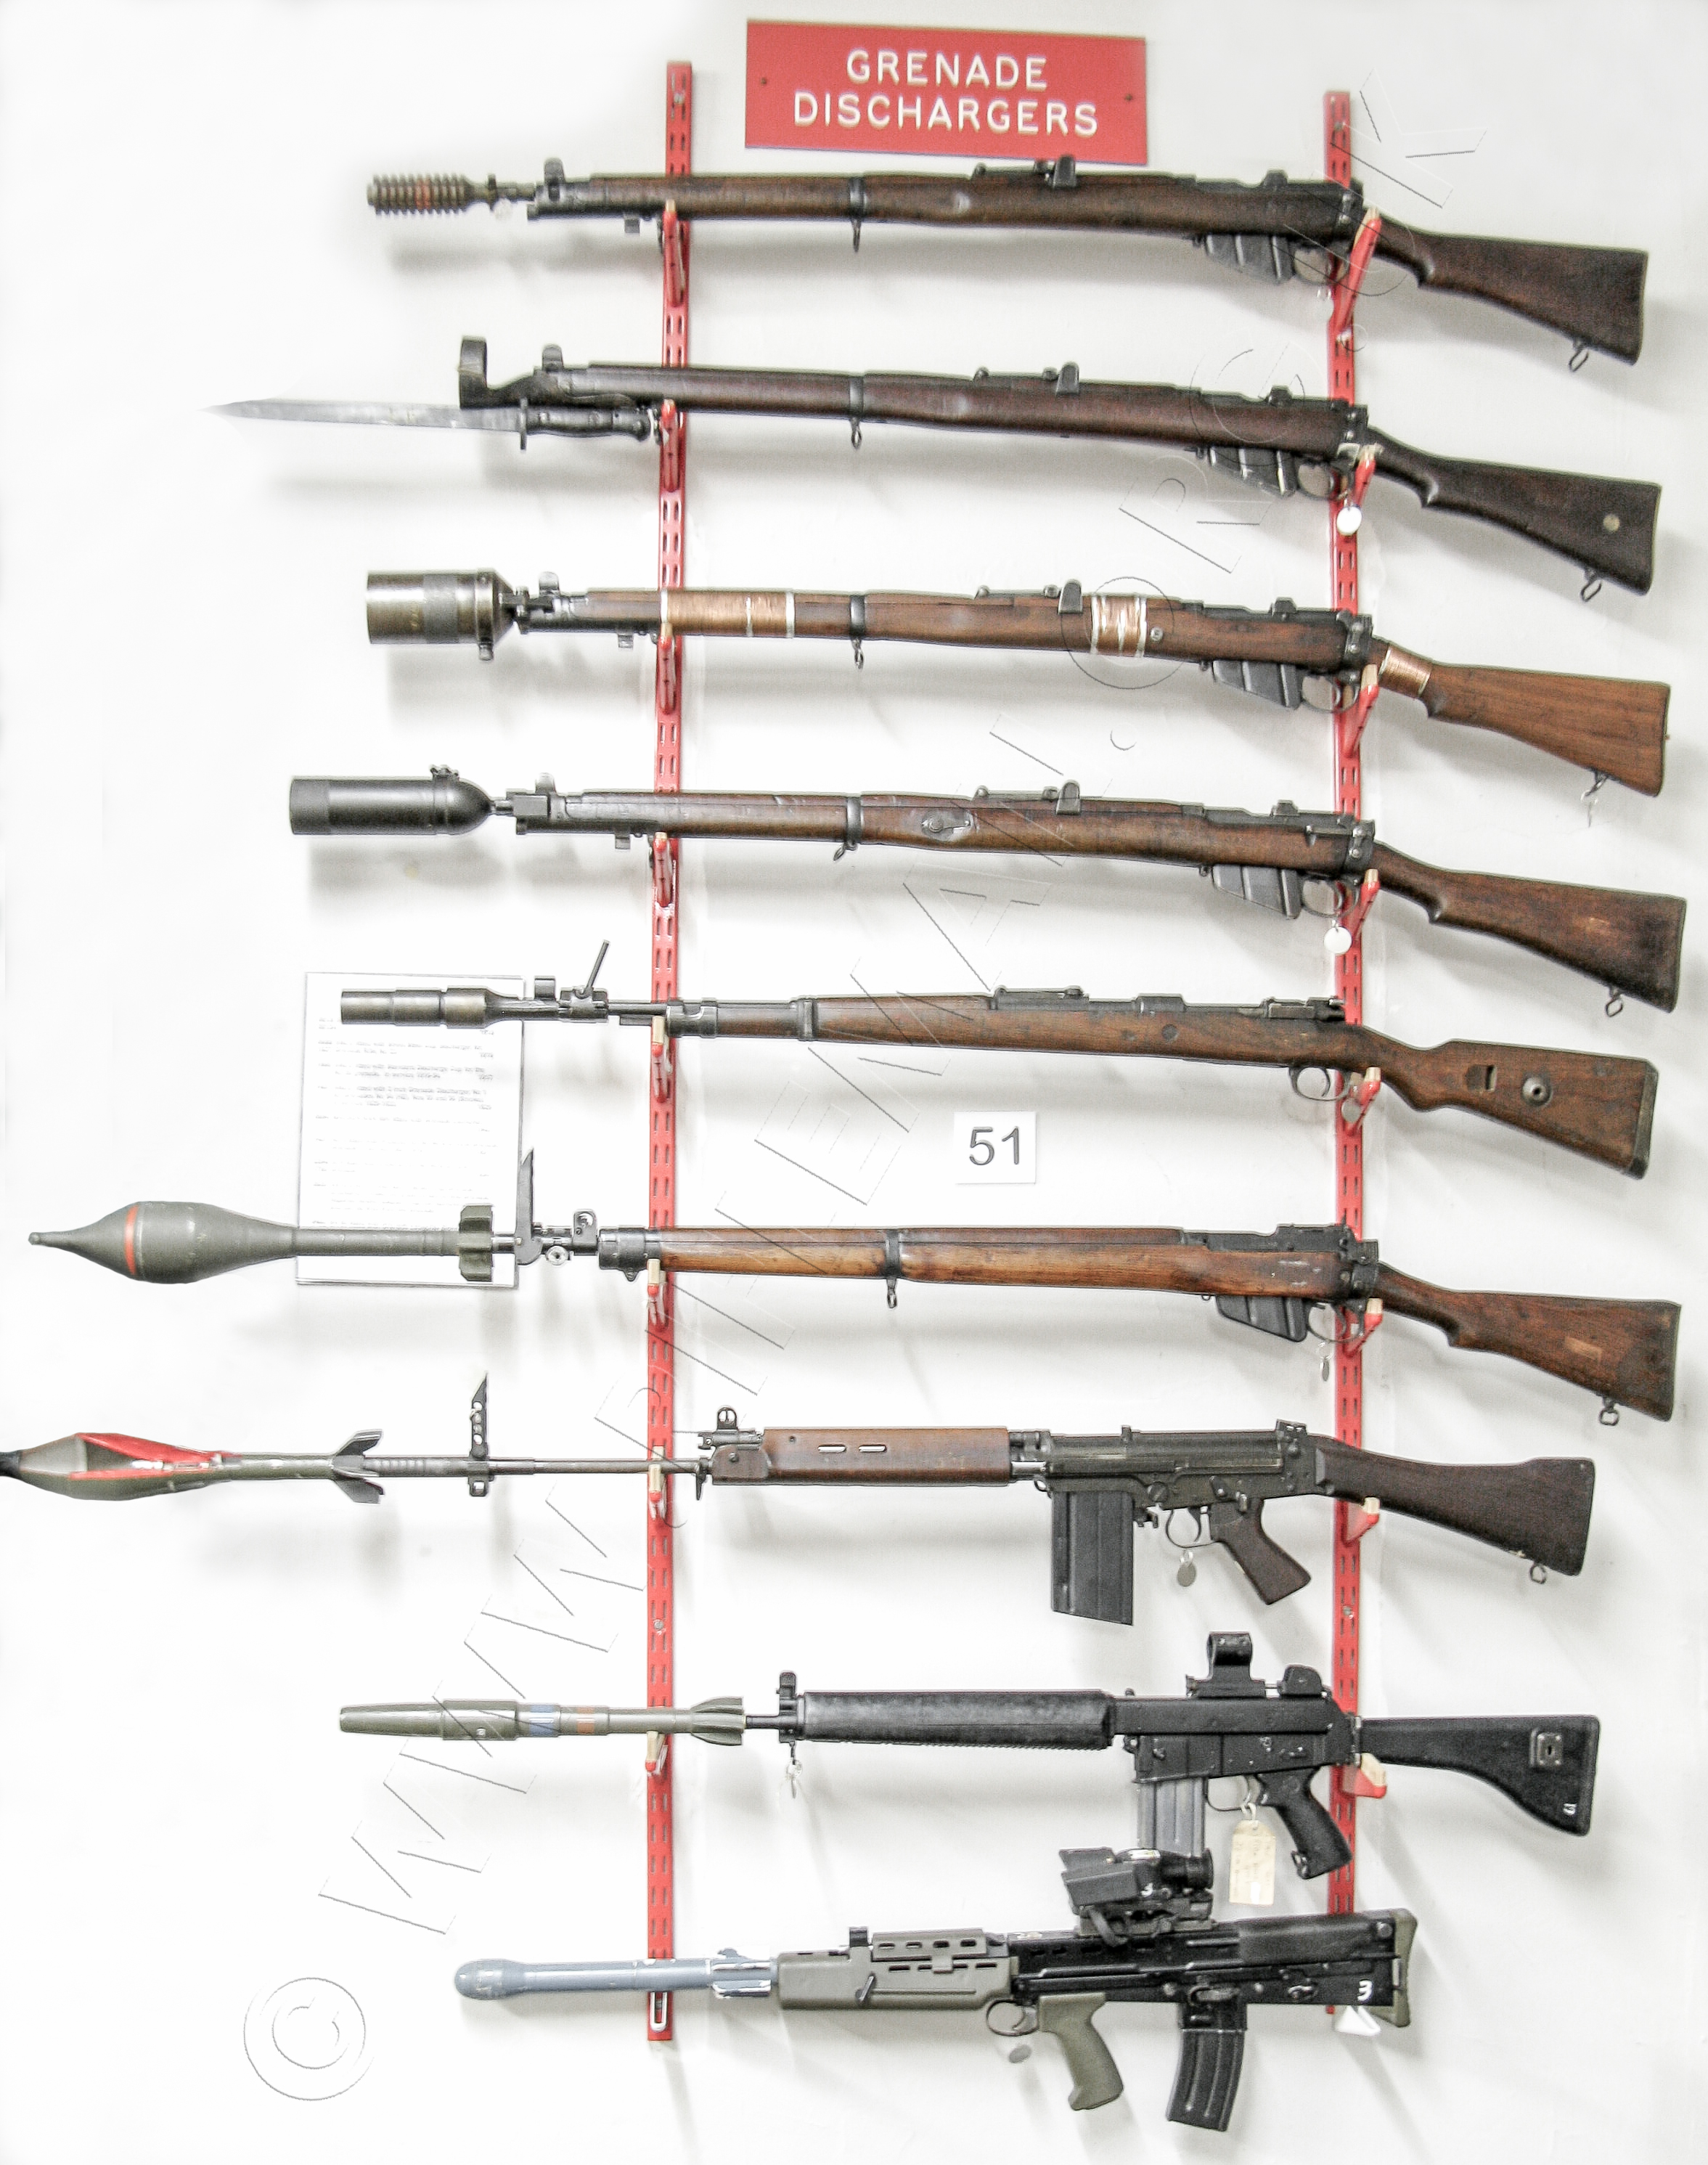 https://www.rifleman.org.uk/Images/GRENADES/Grenade-rifle-display-Warminster-hr.jpg